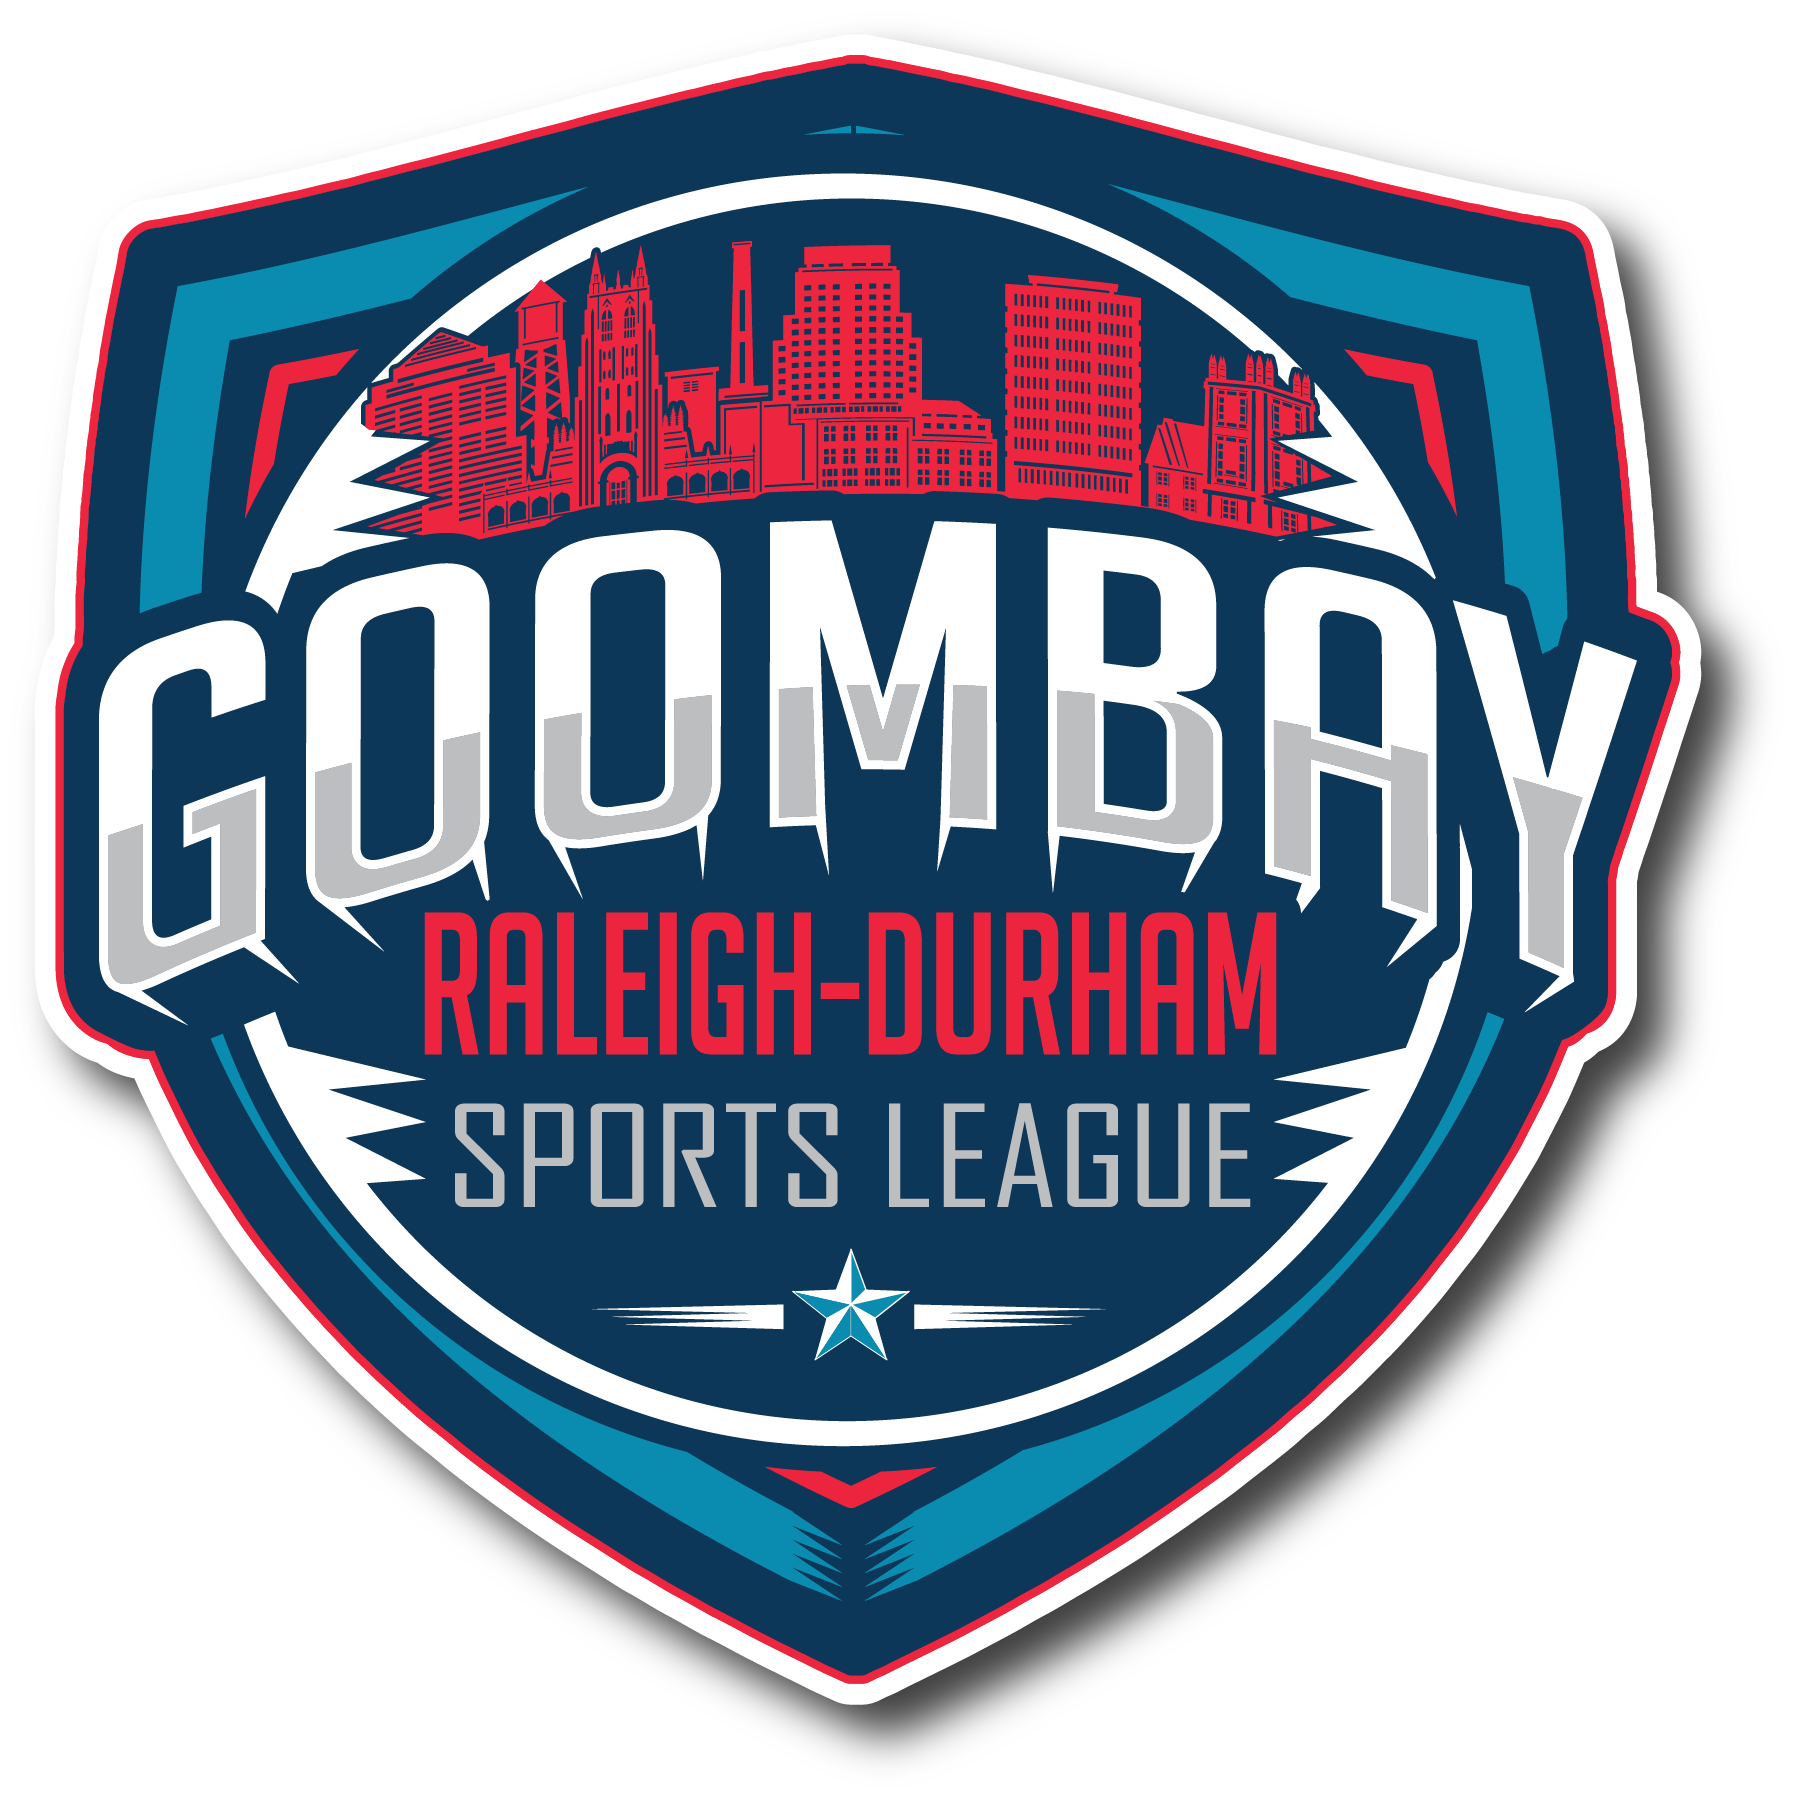 Goombay Raleigh Durham : Tournaments : Goombay Raleigh-Durham